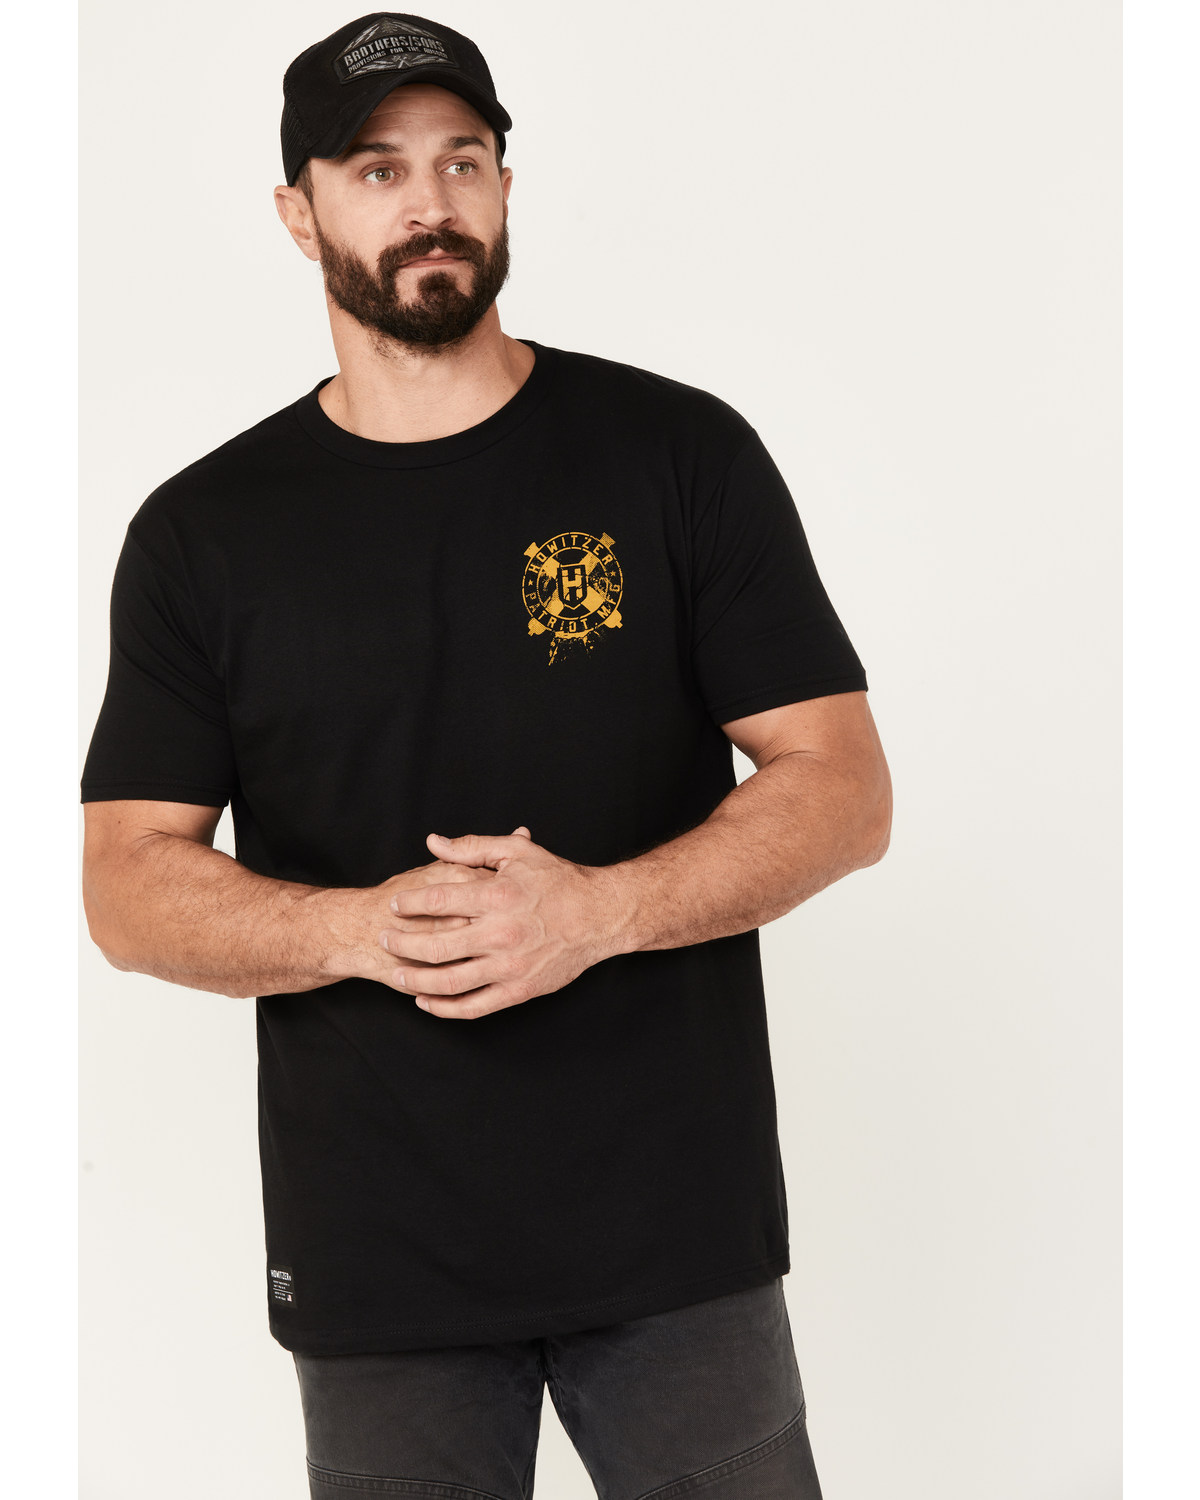 Howitzer Men's Skeleton Tread Short Sleeve Graphic T-Shirt